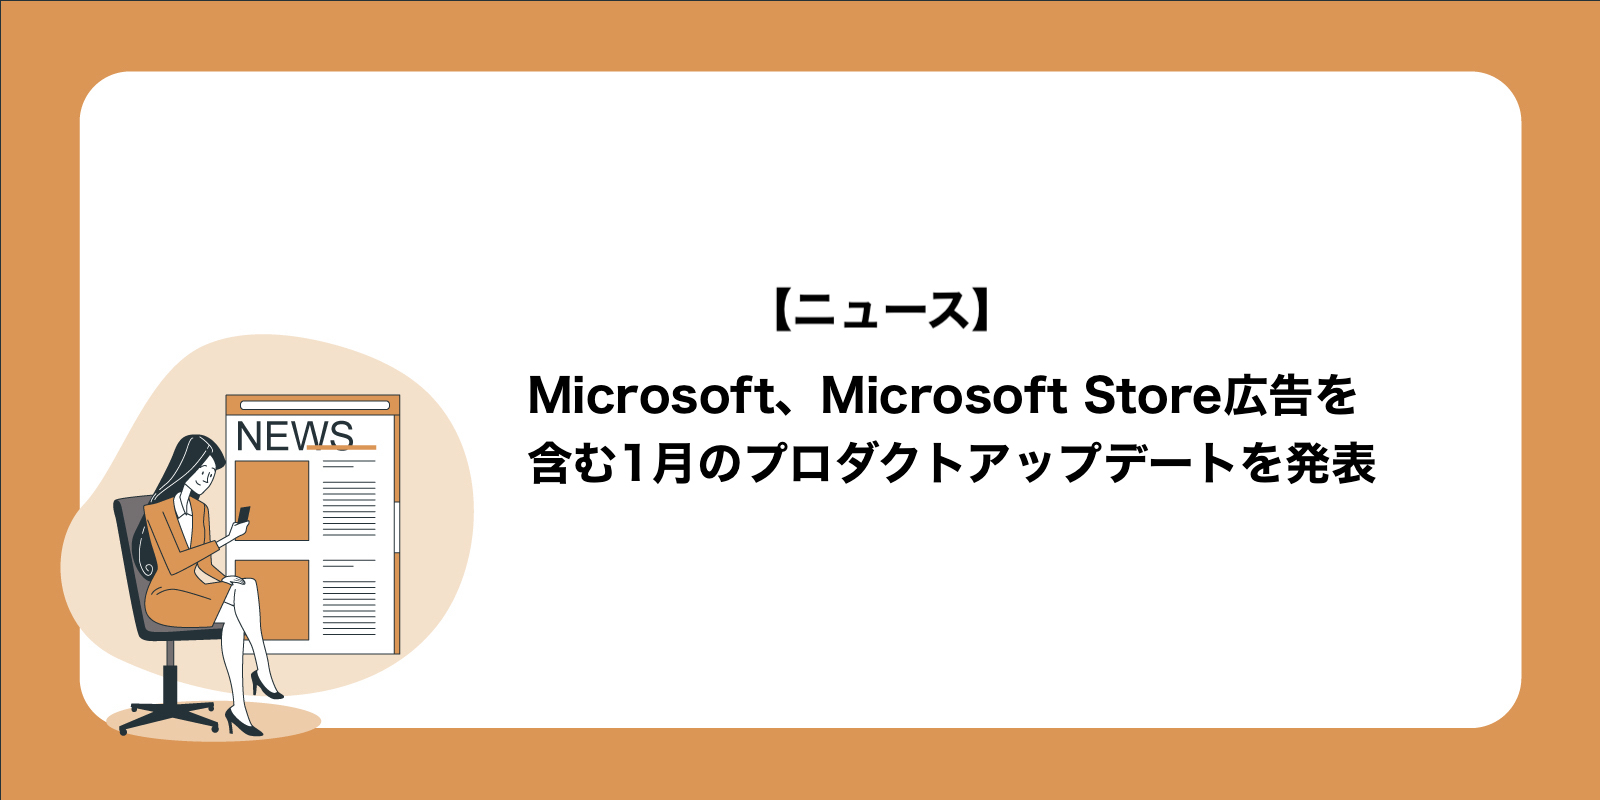 Microsoft広告、Microsoft Store広告を含む1月のプロダクトアップデートを発表